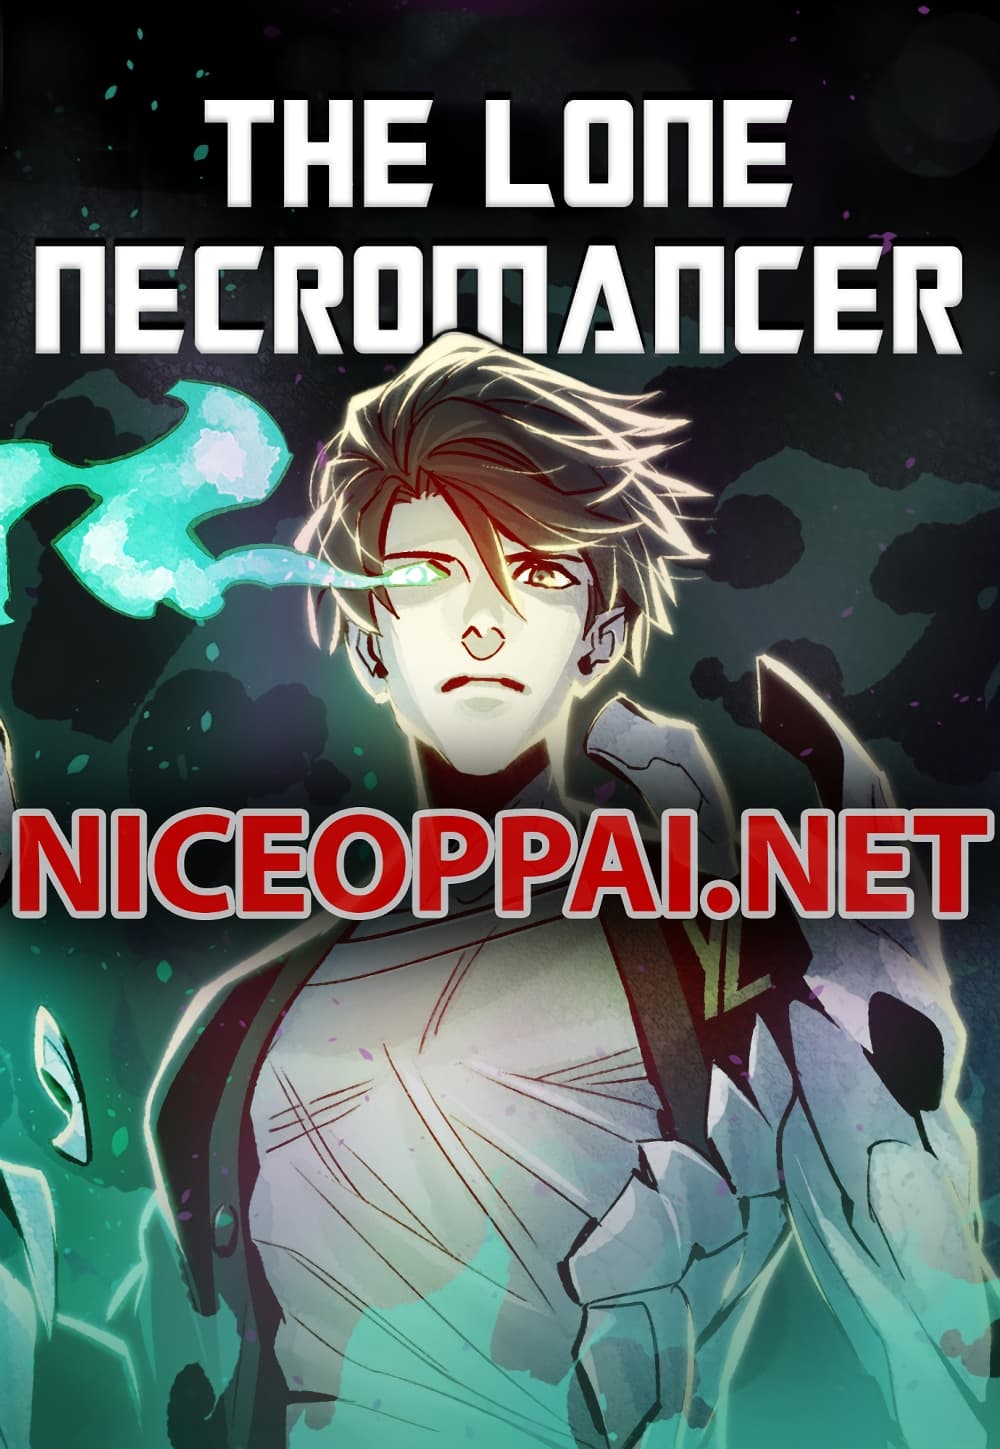 The Lone Necromancer 55-55